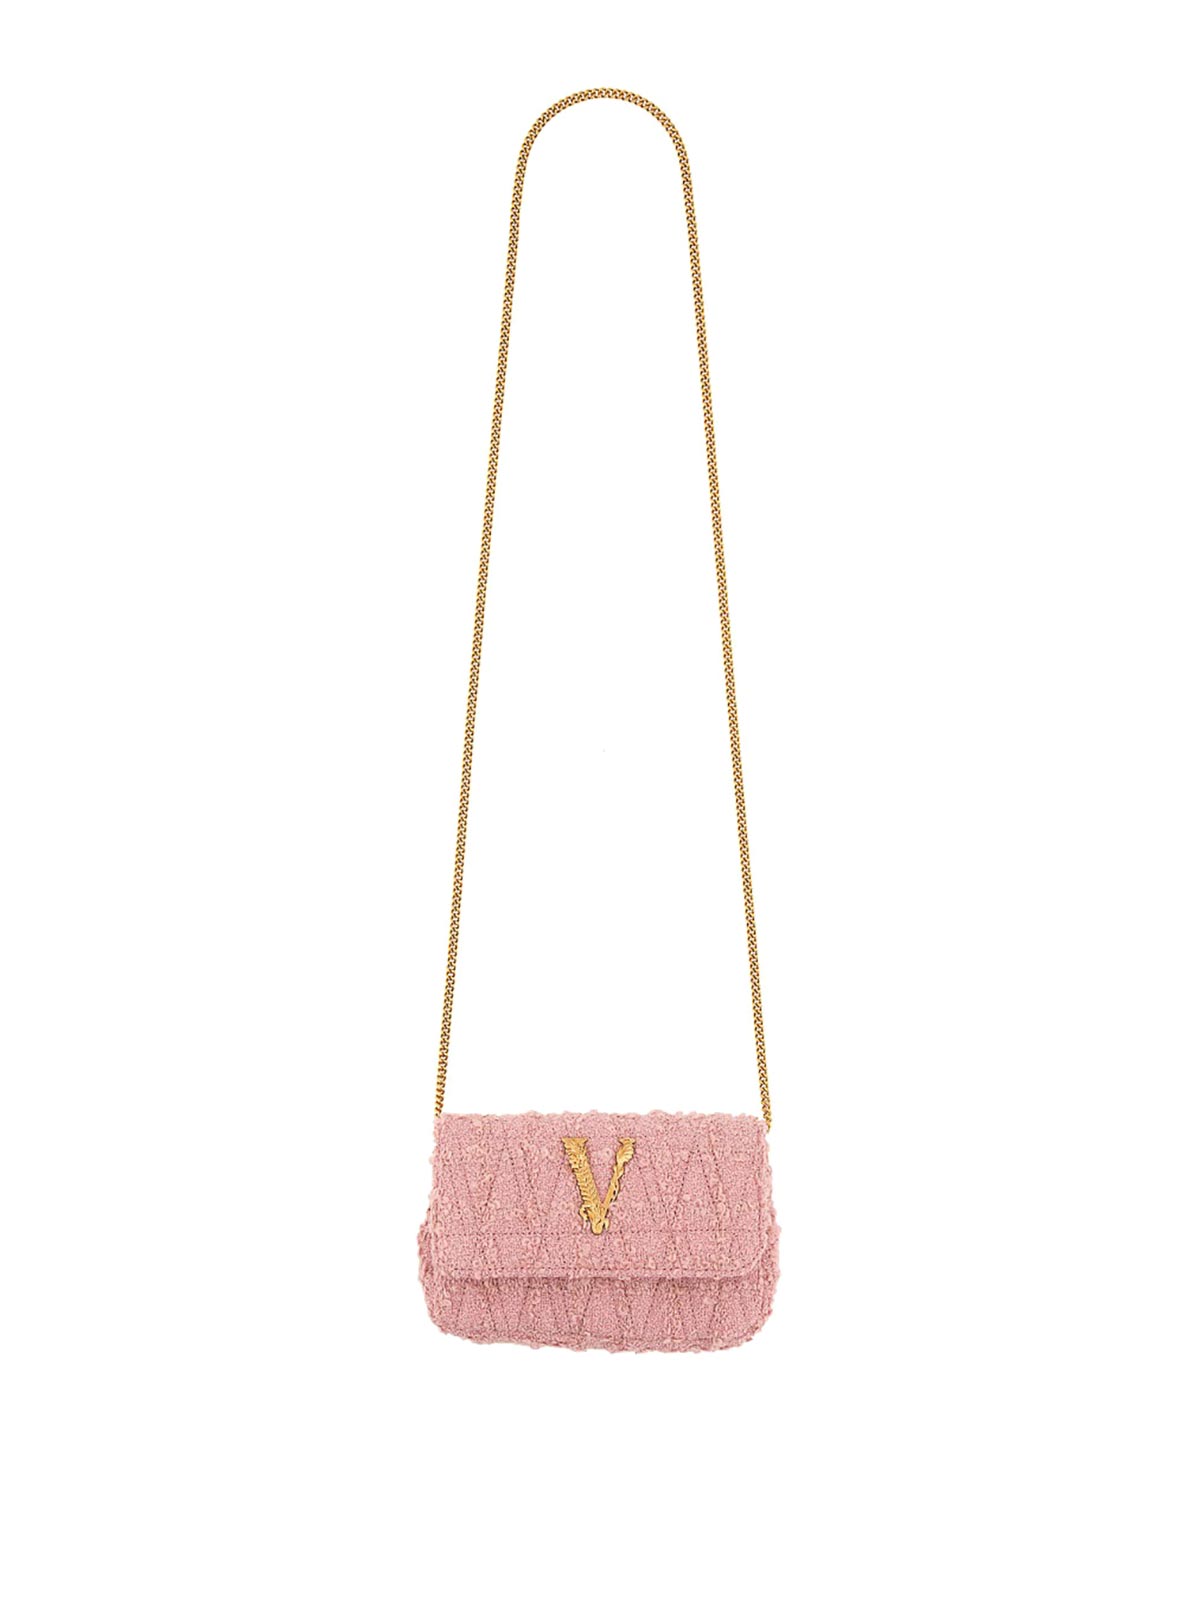 Versace Virtus Bag In Nude & Neutrals